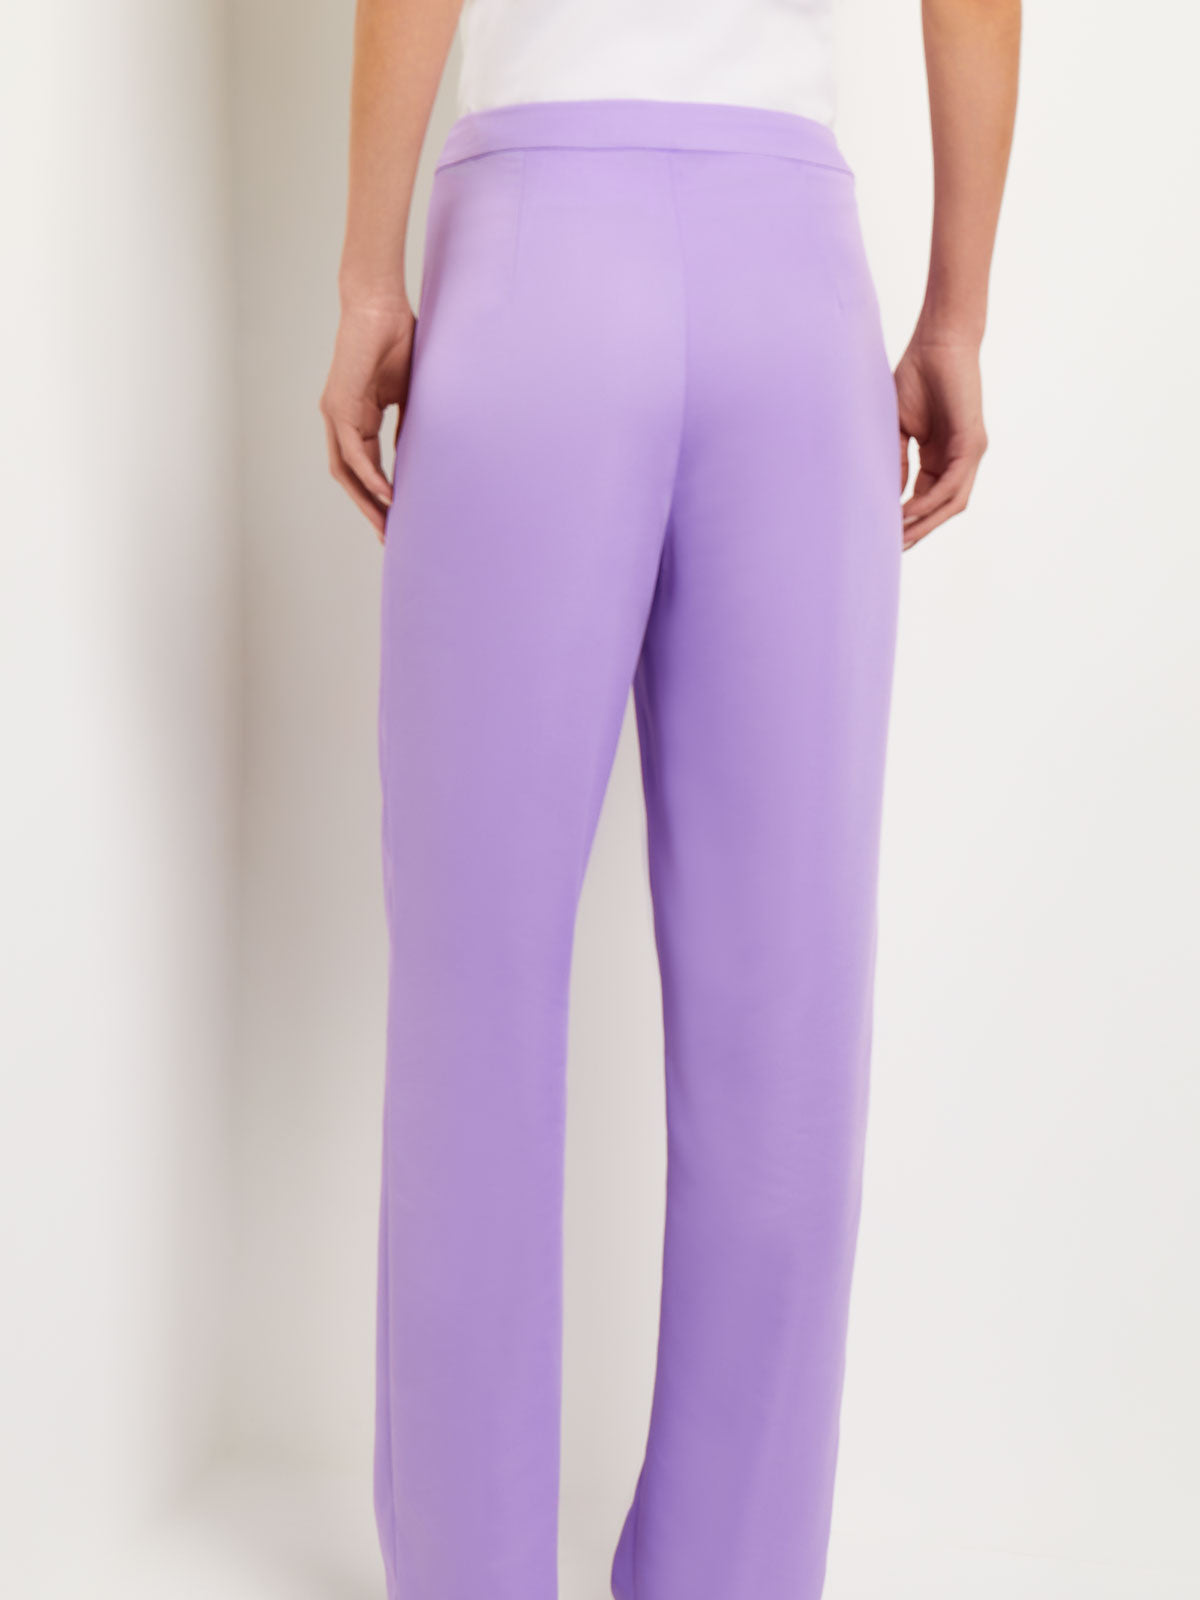 Wide-Legged purple pants | Shopee Malaysia